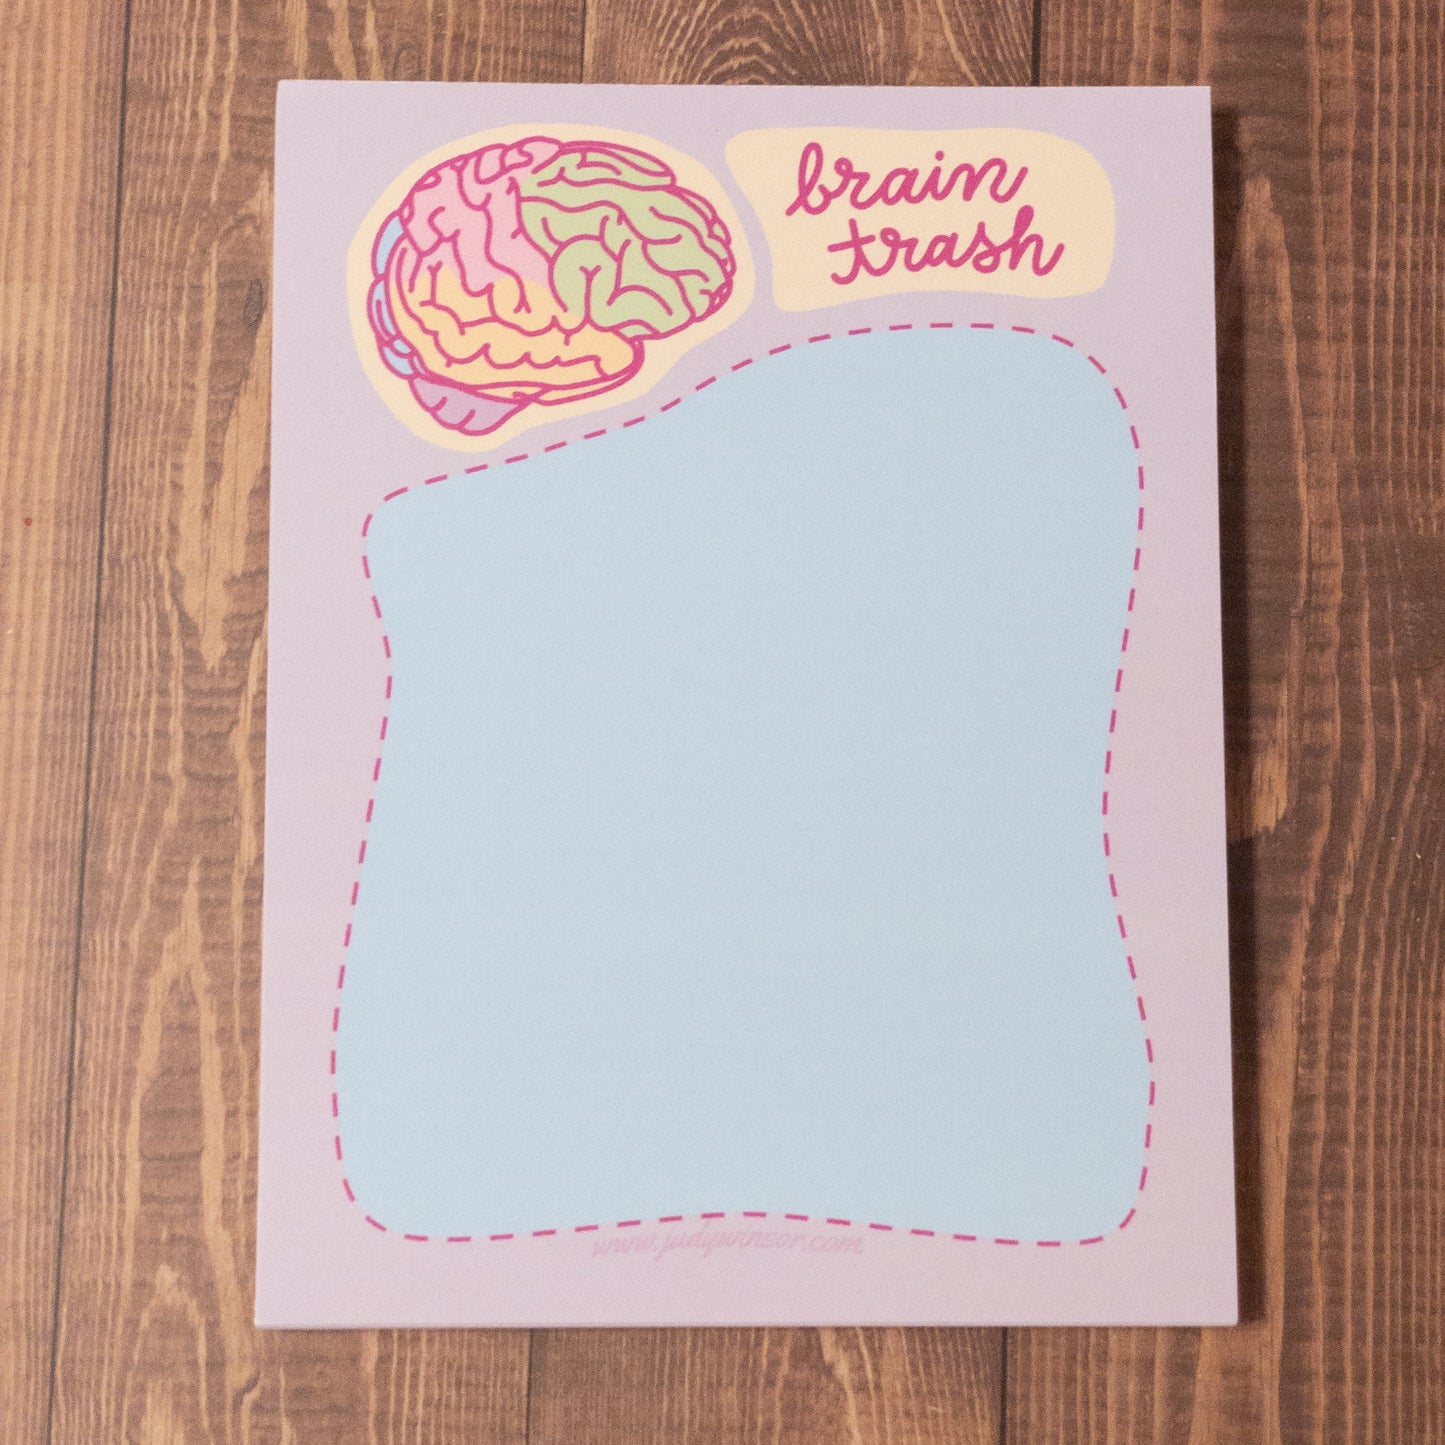 Brain Trash Notepad Memo Pad To Do List